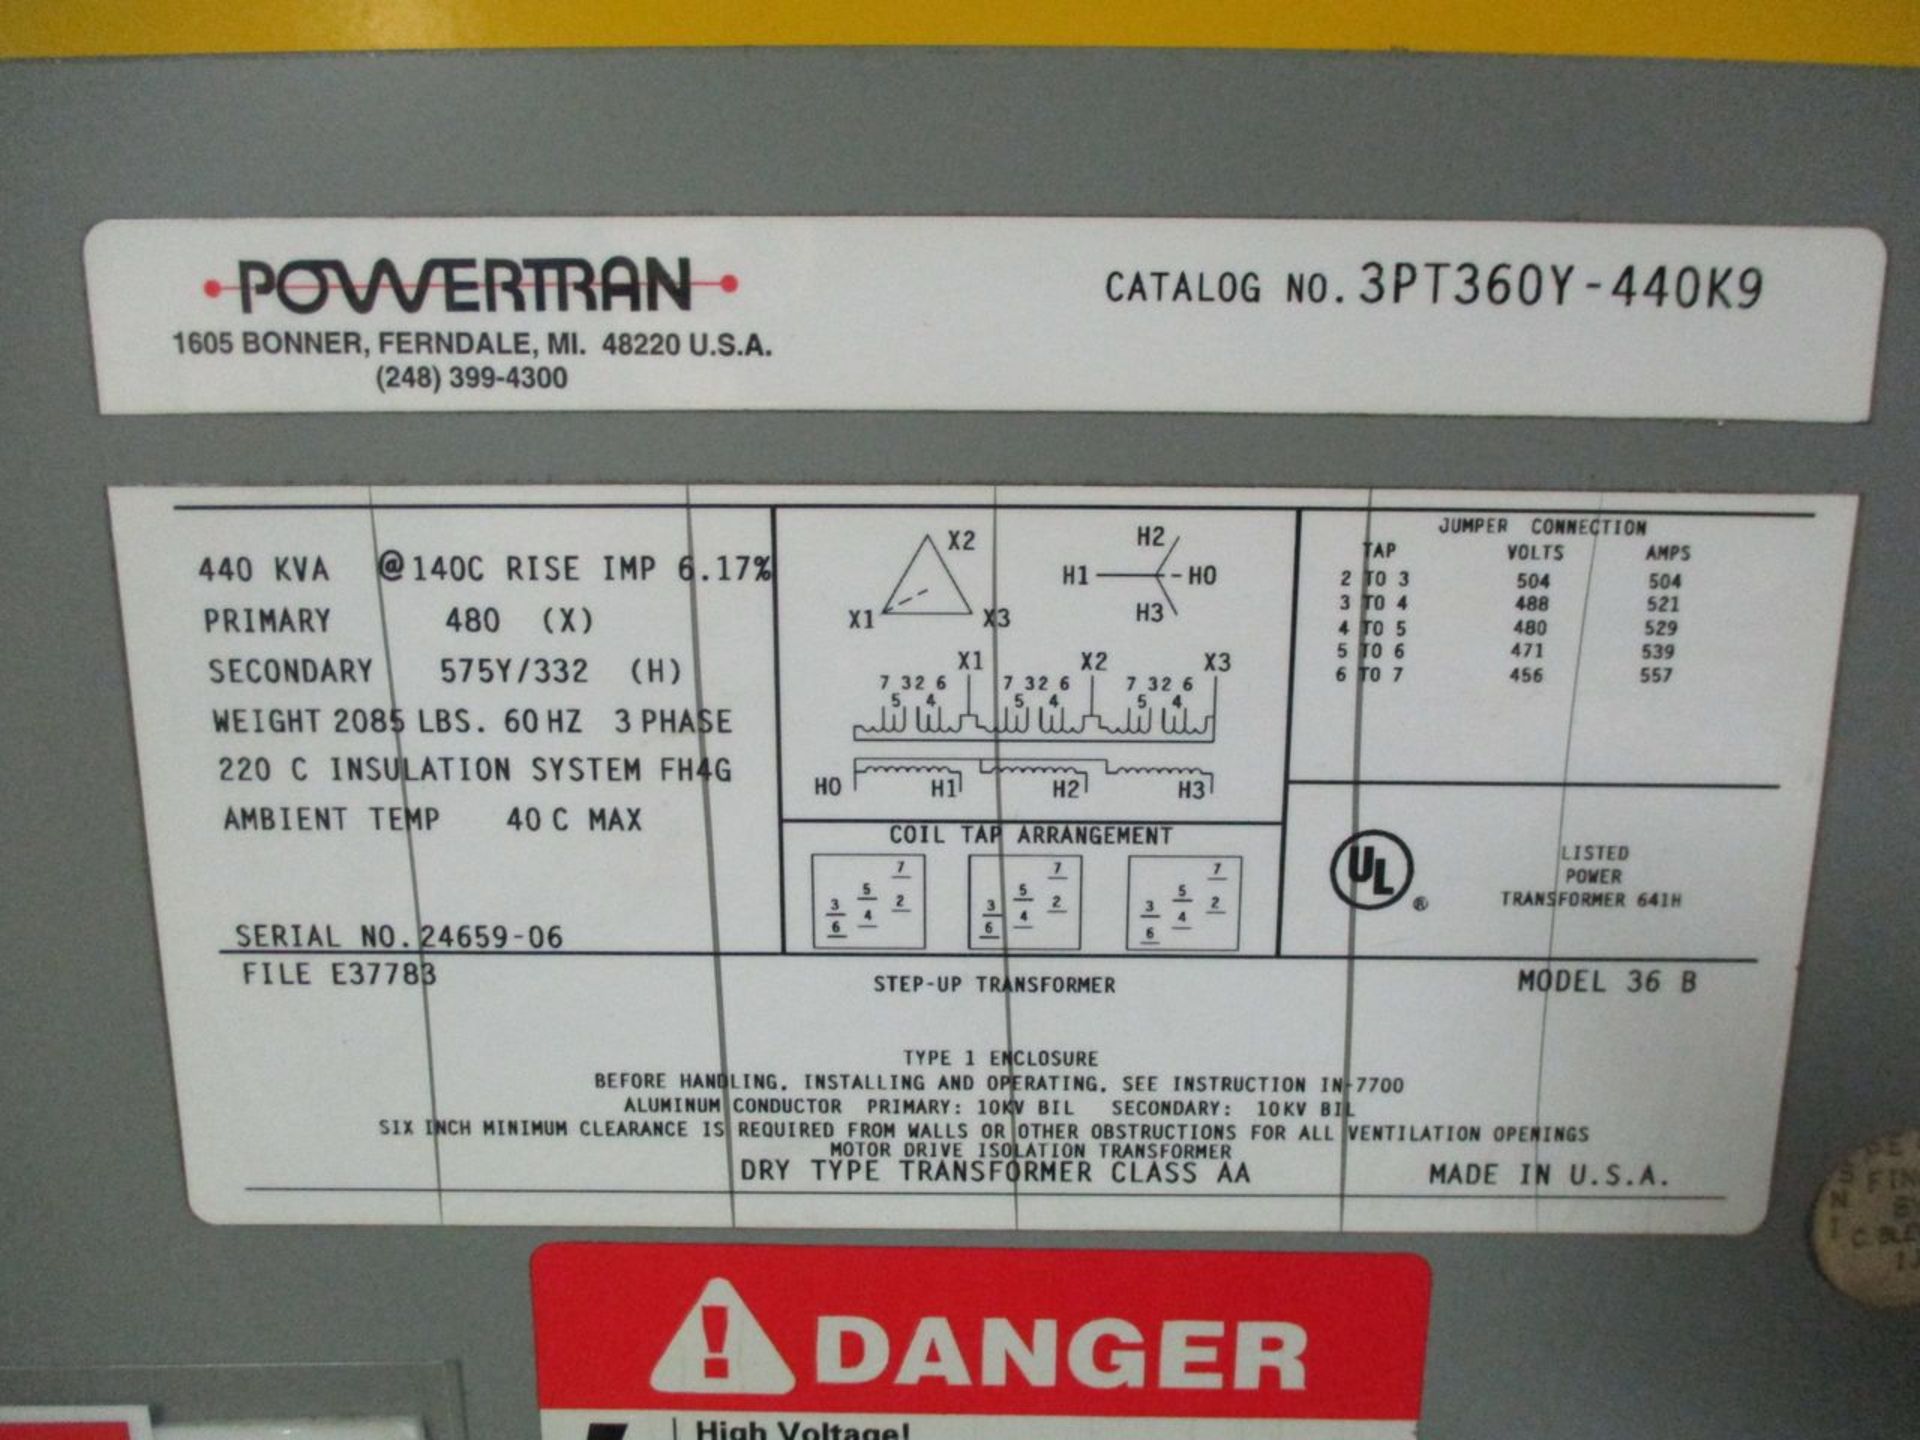 Powertran 3PT360Y-440K9 440 KVA Transformer, S/N 24659-06 (Cell 17) (Basement CY-70) - Image 2 of 2